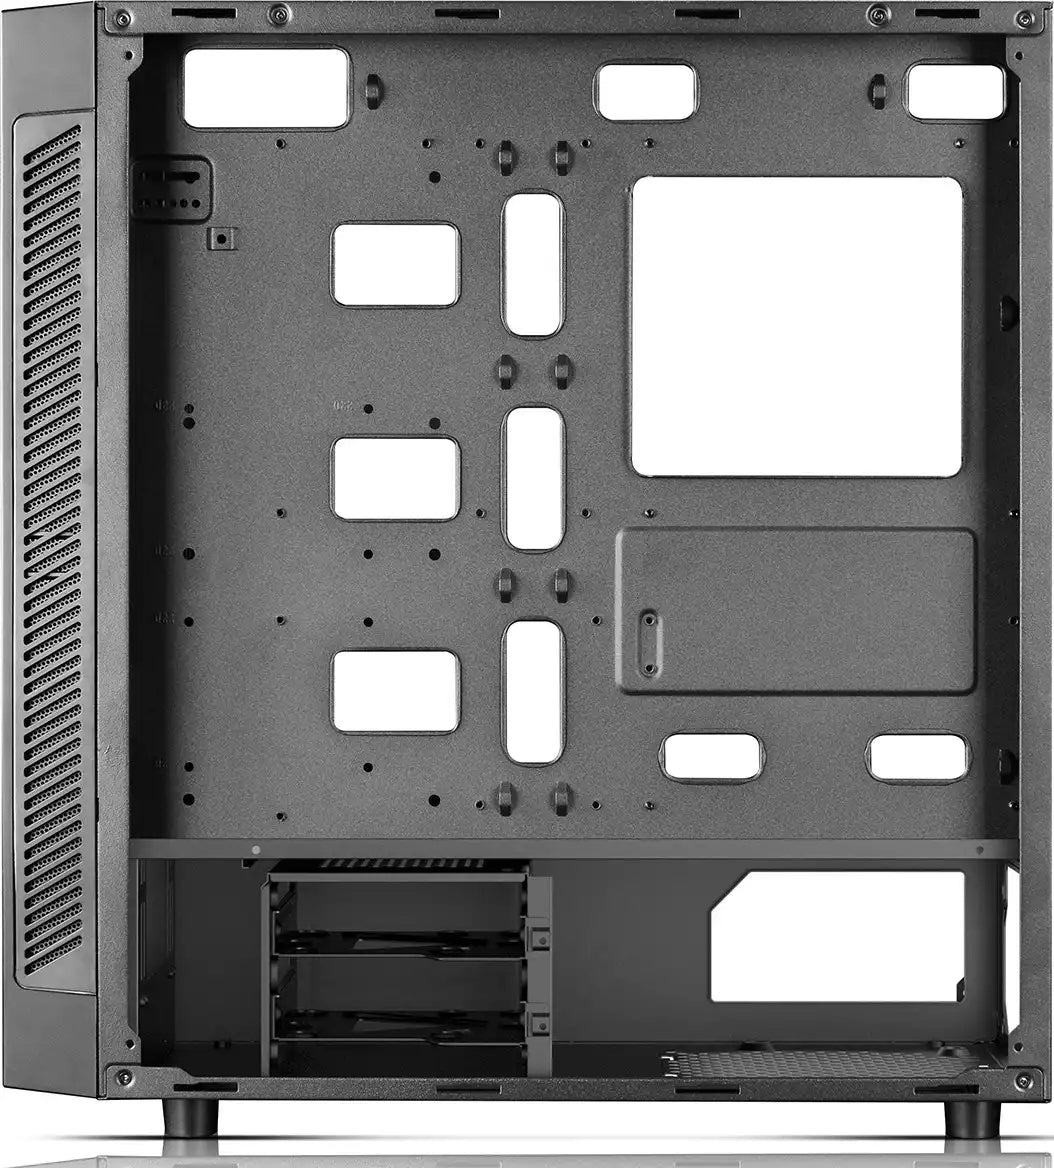 DeepCool MATREXX 55 V3 4 Fan Black ATX PC Case | DP-ATX-MATREXX55V3-AR-4F |